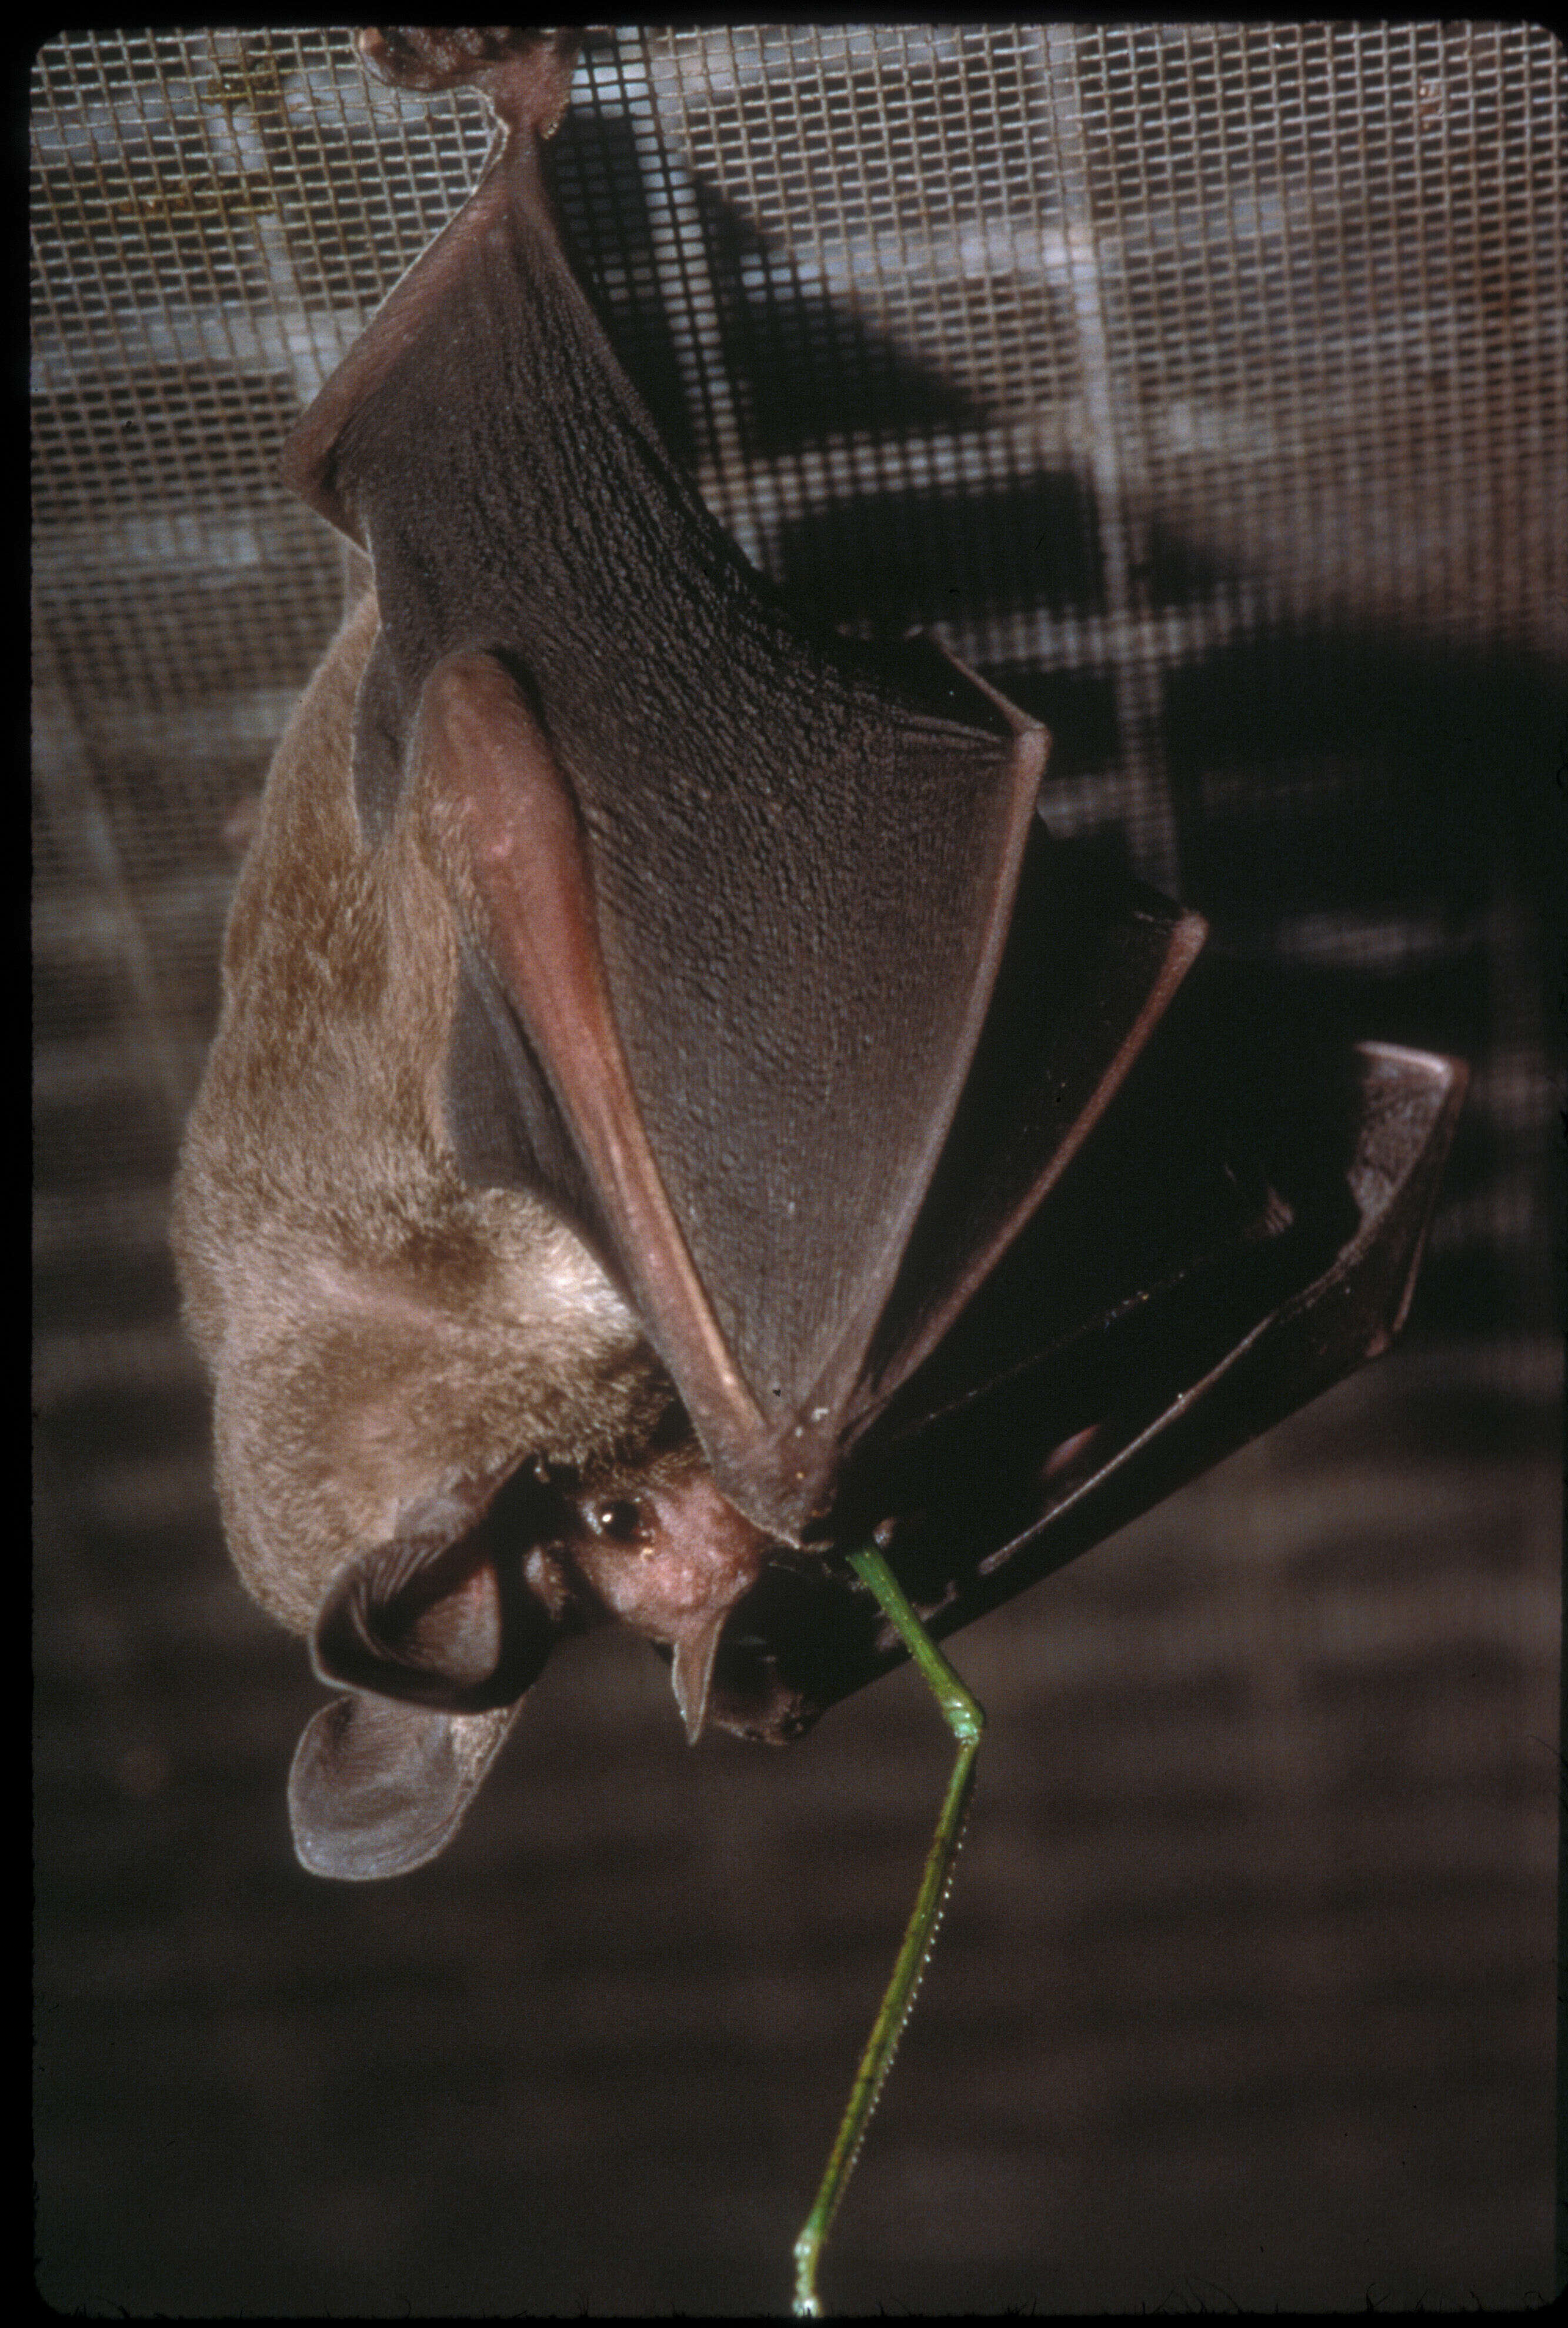 Image of Kalko’s Round-eared Bat